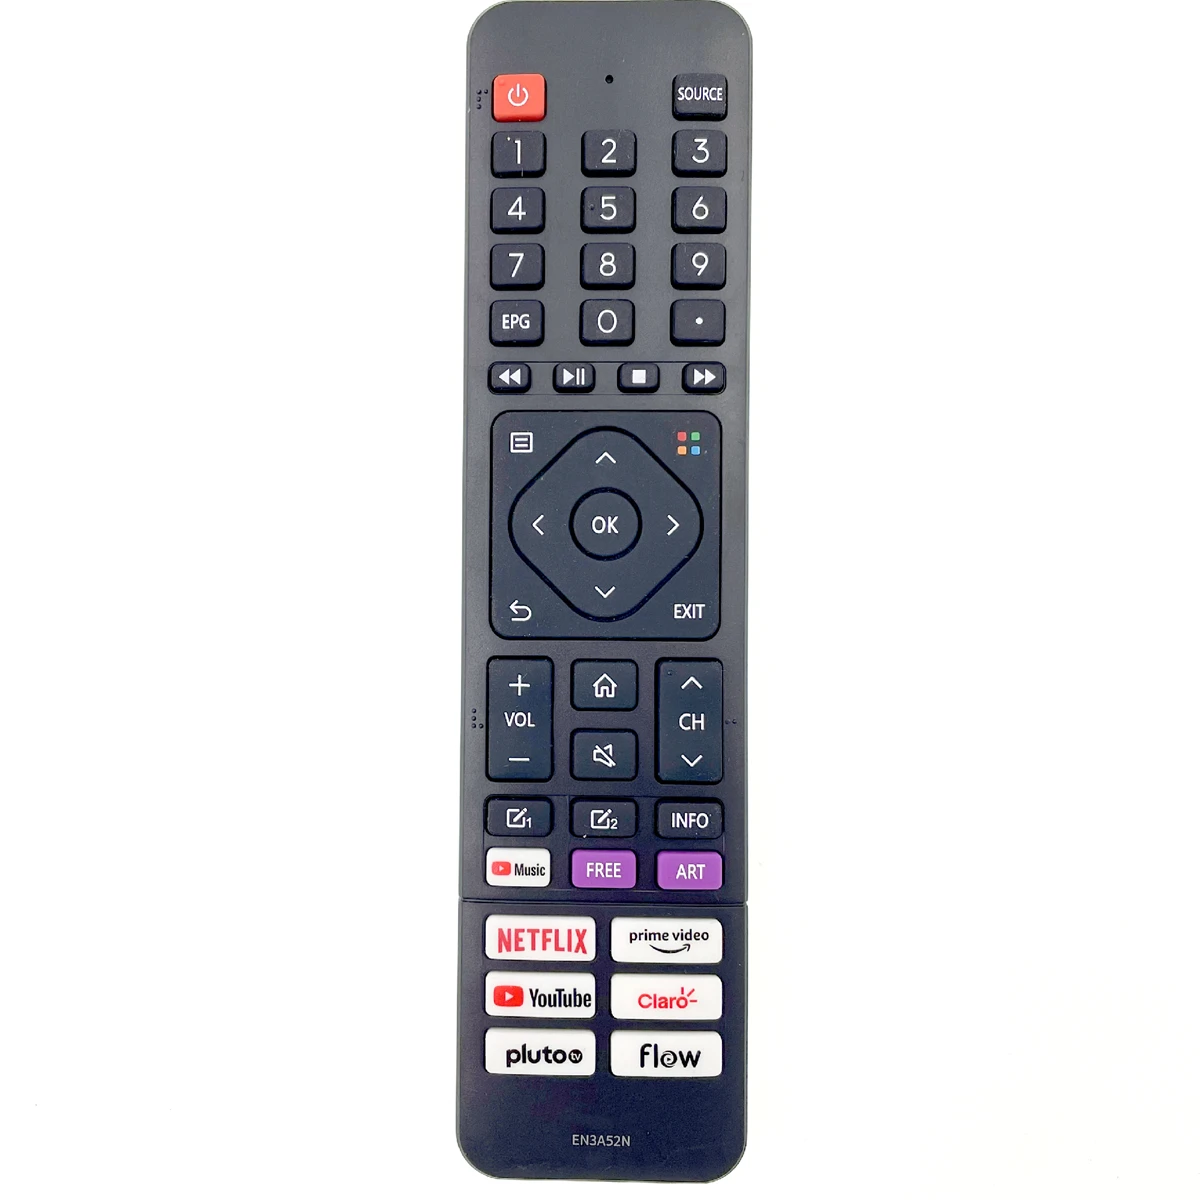 Original Remote Control EN3A52N For NOBLEX Smart TV DK43X5100 DK43X5100PI - Used Tested